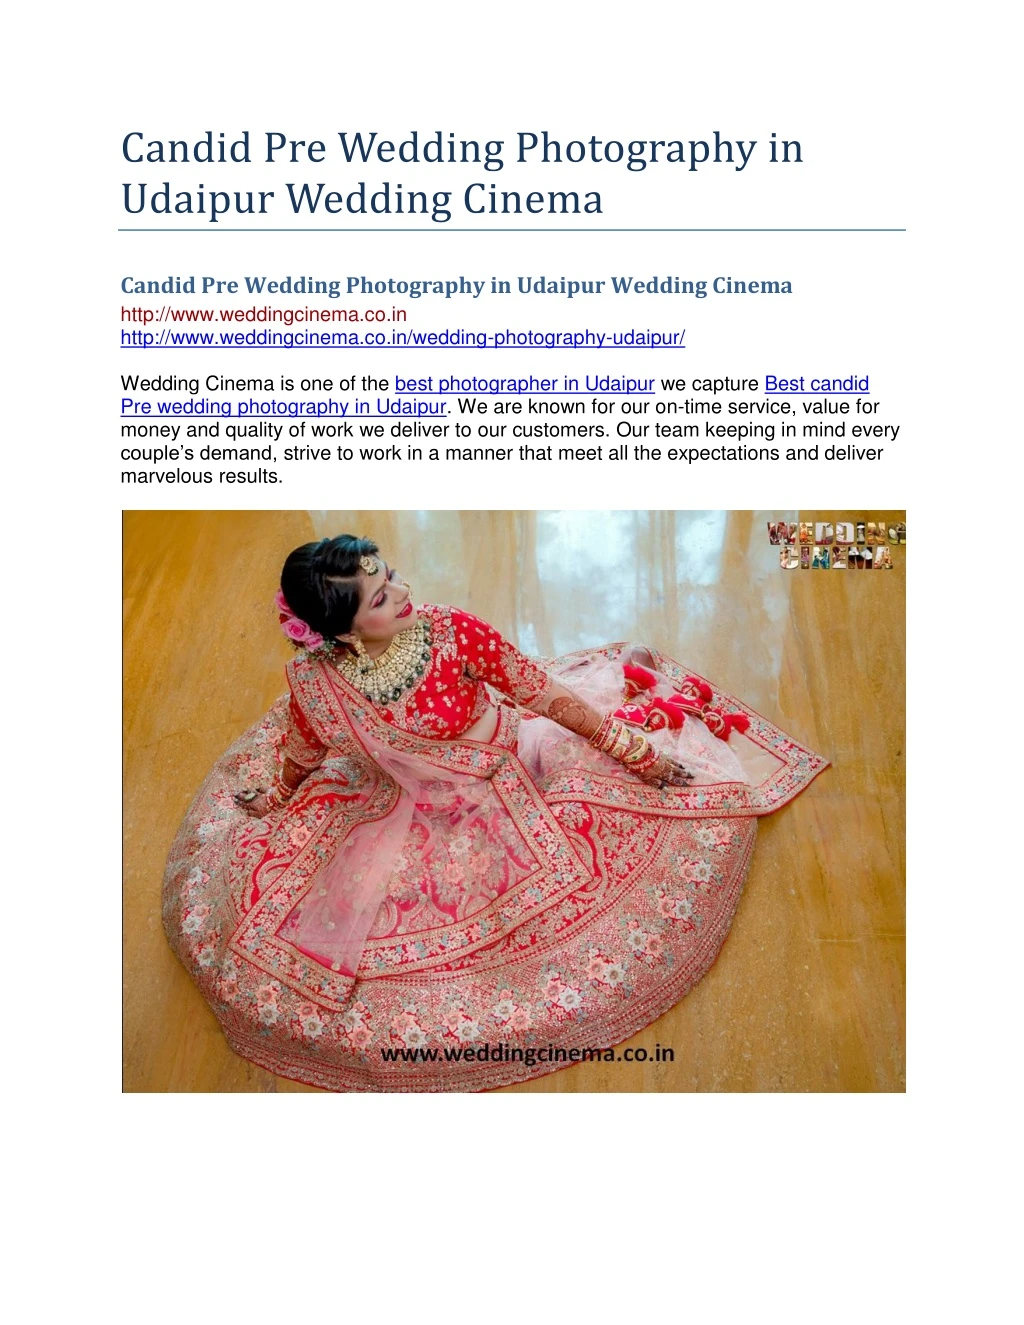 candid pre wedding photography in udaipur wedding